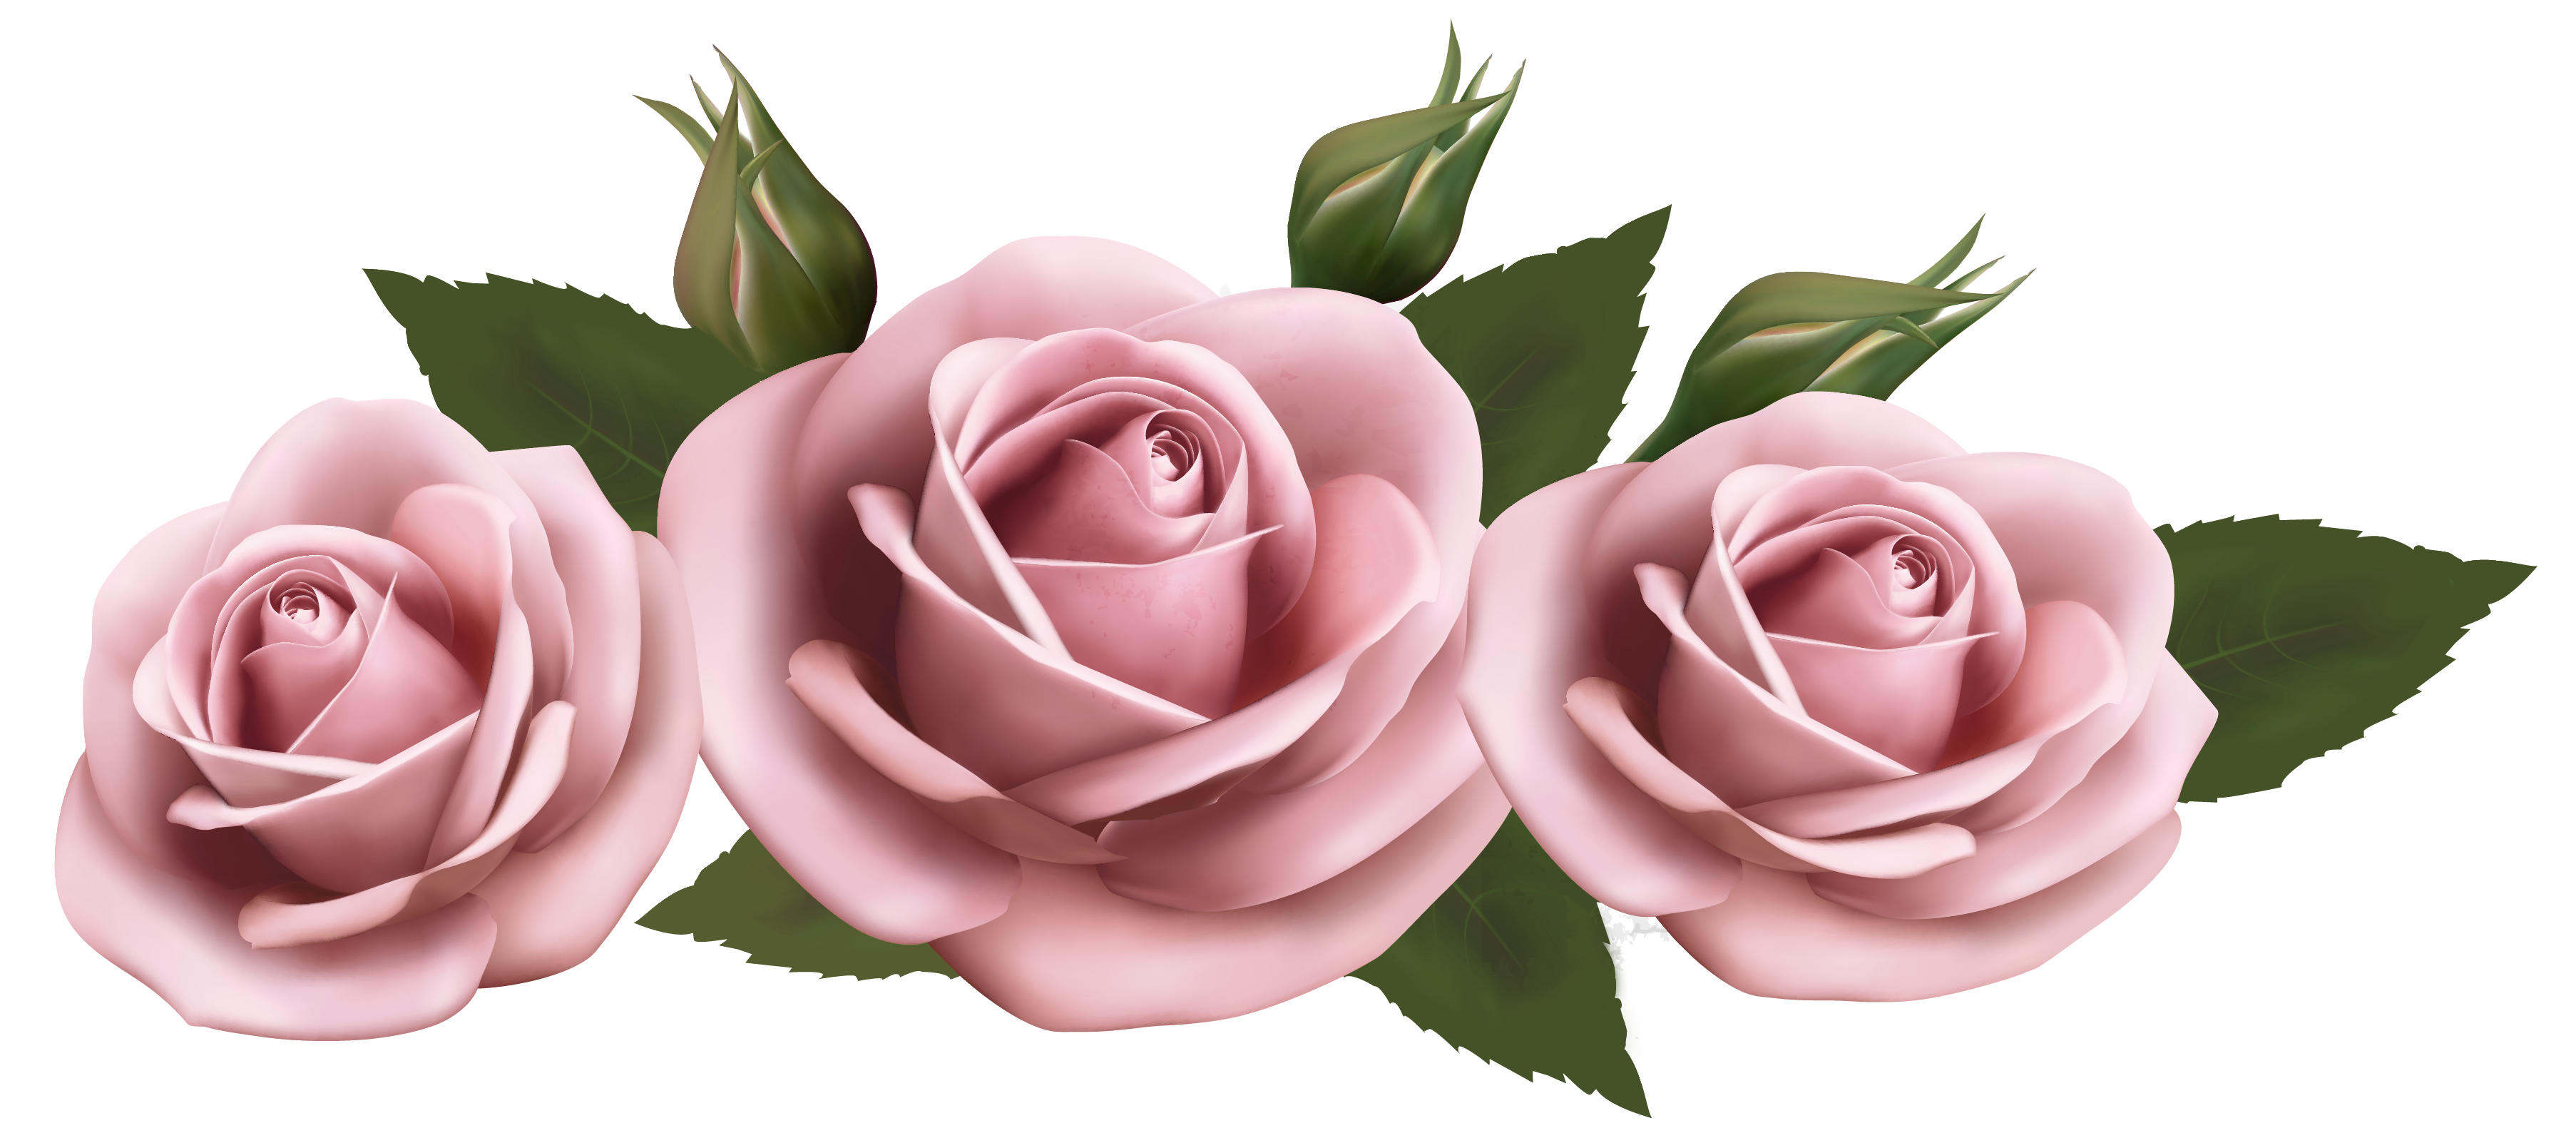 Download PNG image - Pink Rose Flower PNG Pic 